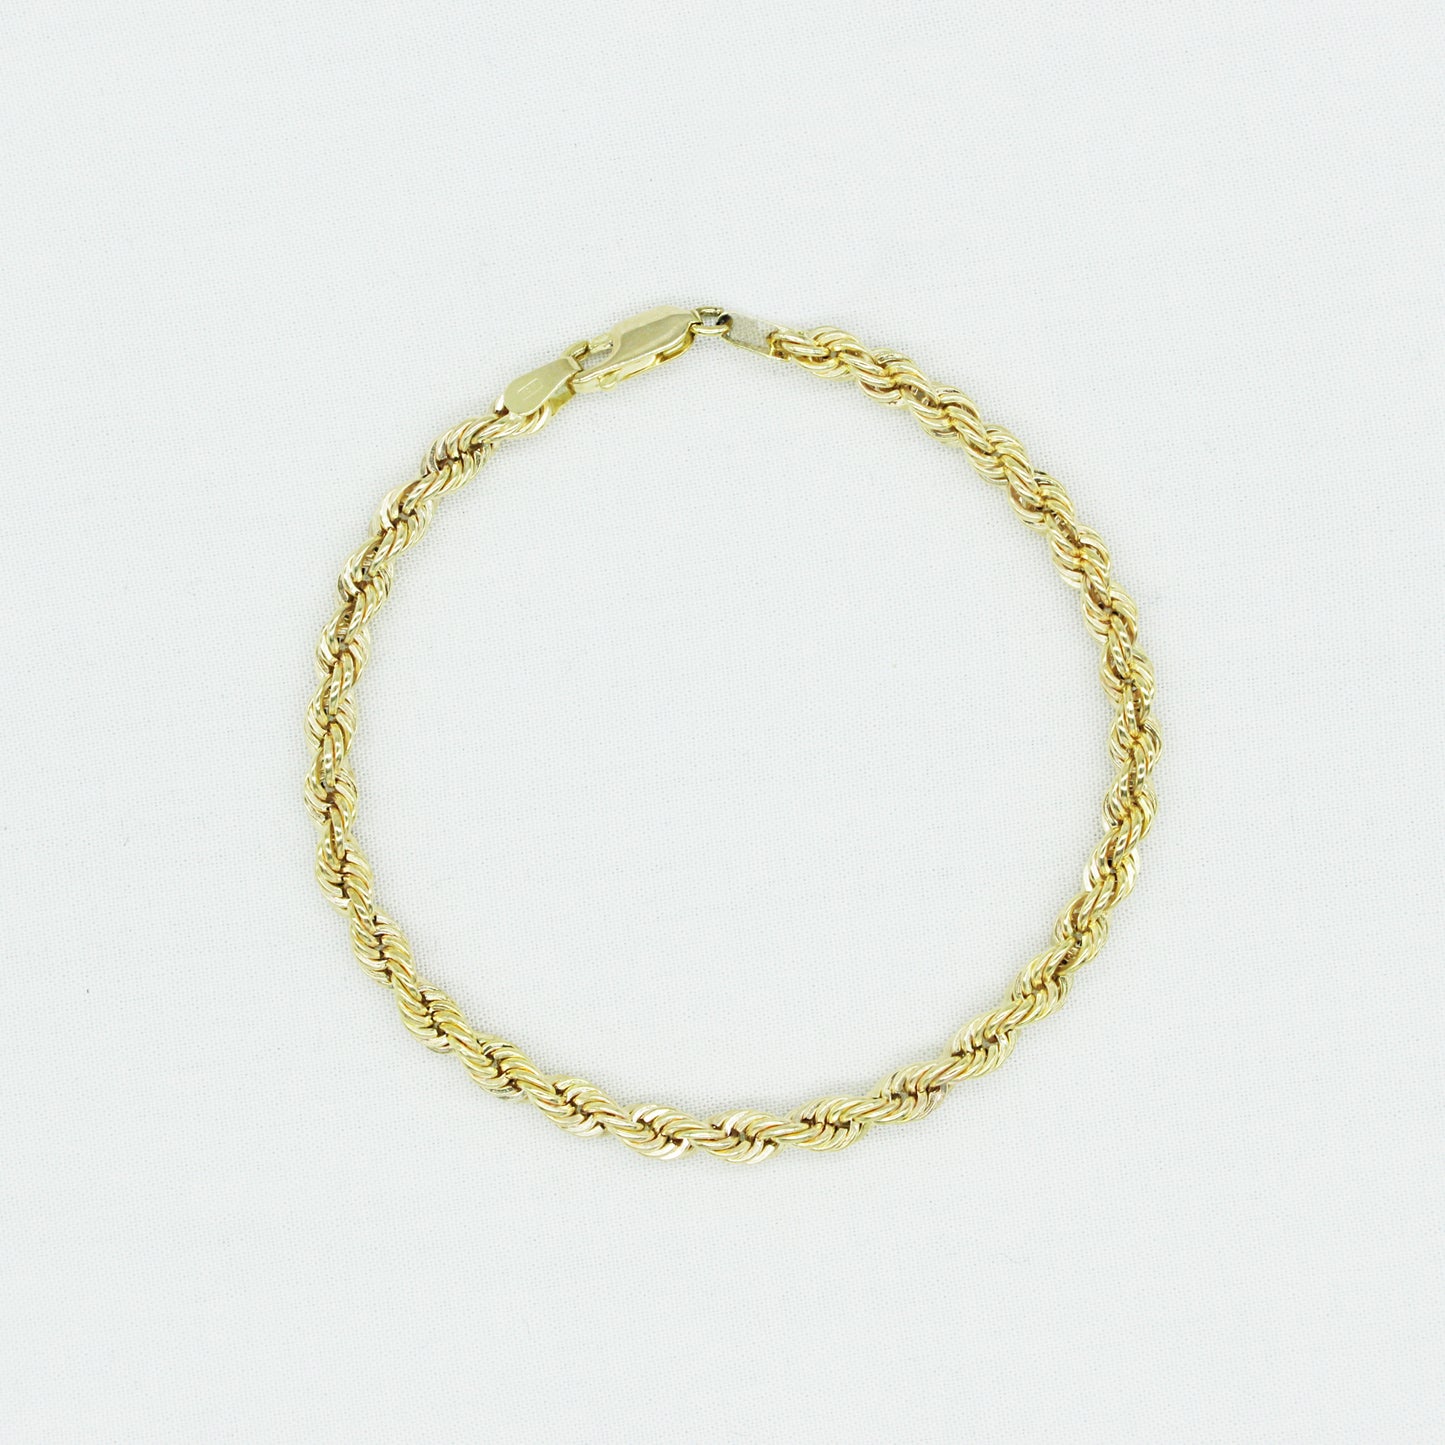 Rope Link Bracelet in 10K (4.5mm x 4.5mm)